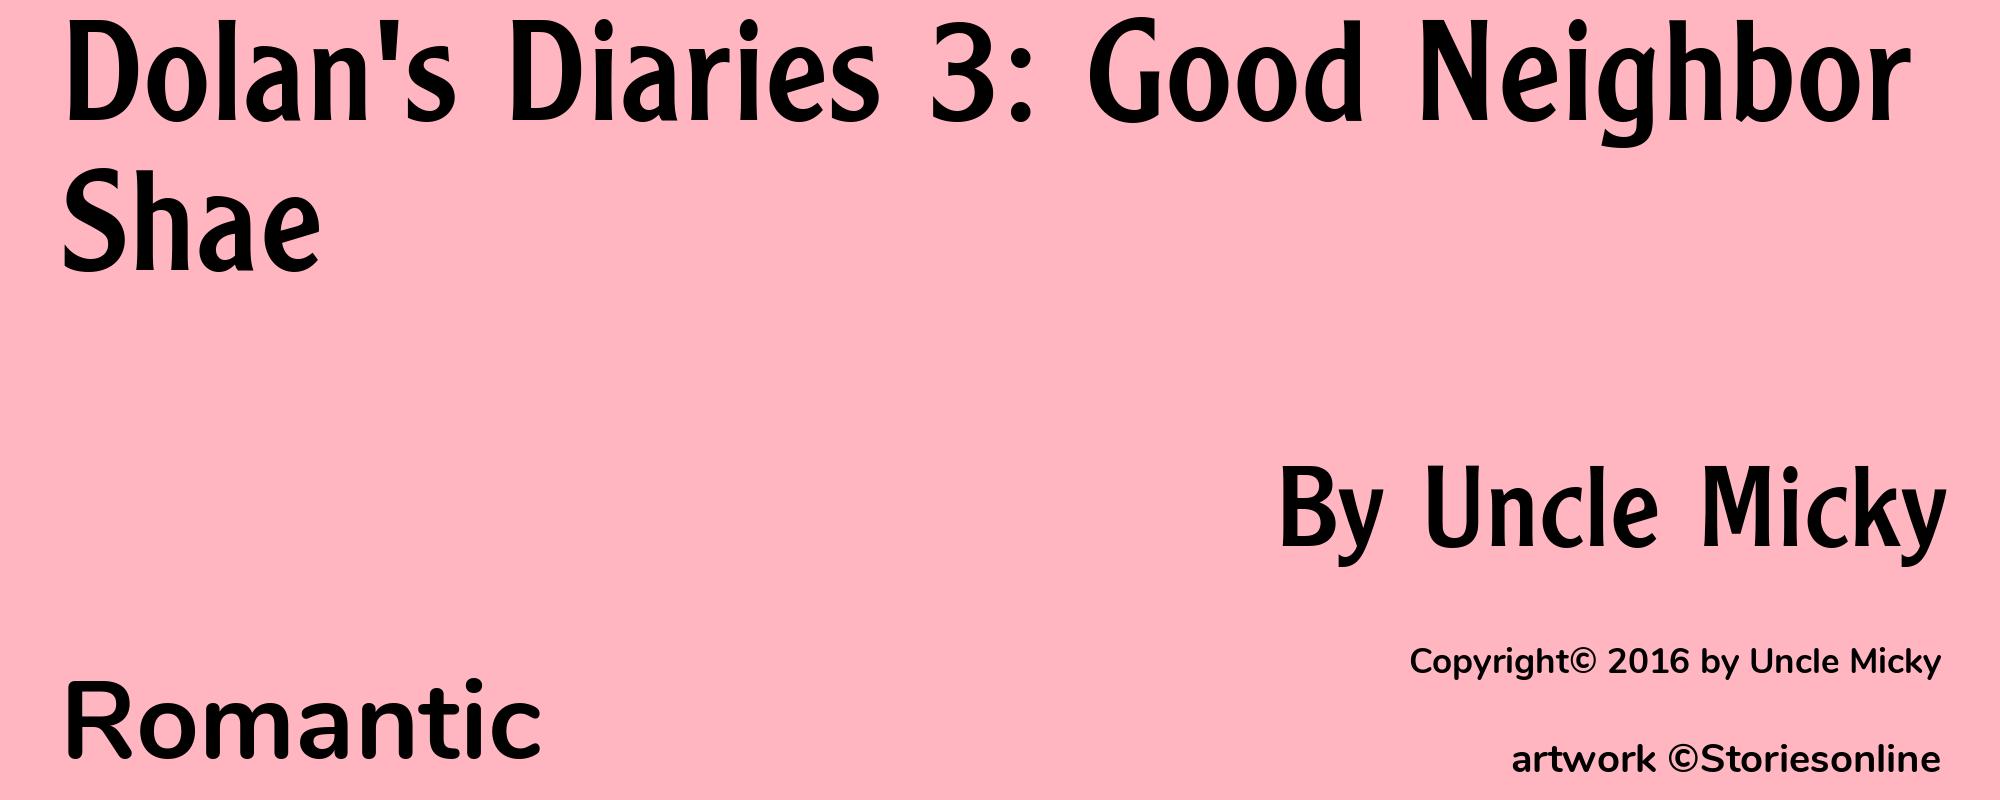 Dolan's Diaries 3: Good Neighbor Shae - Cover